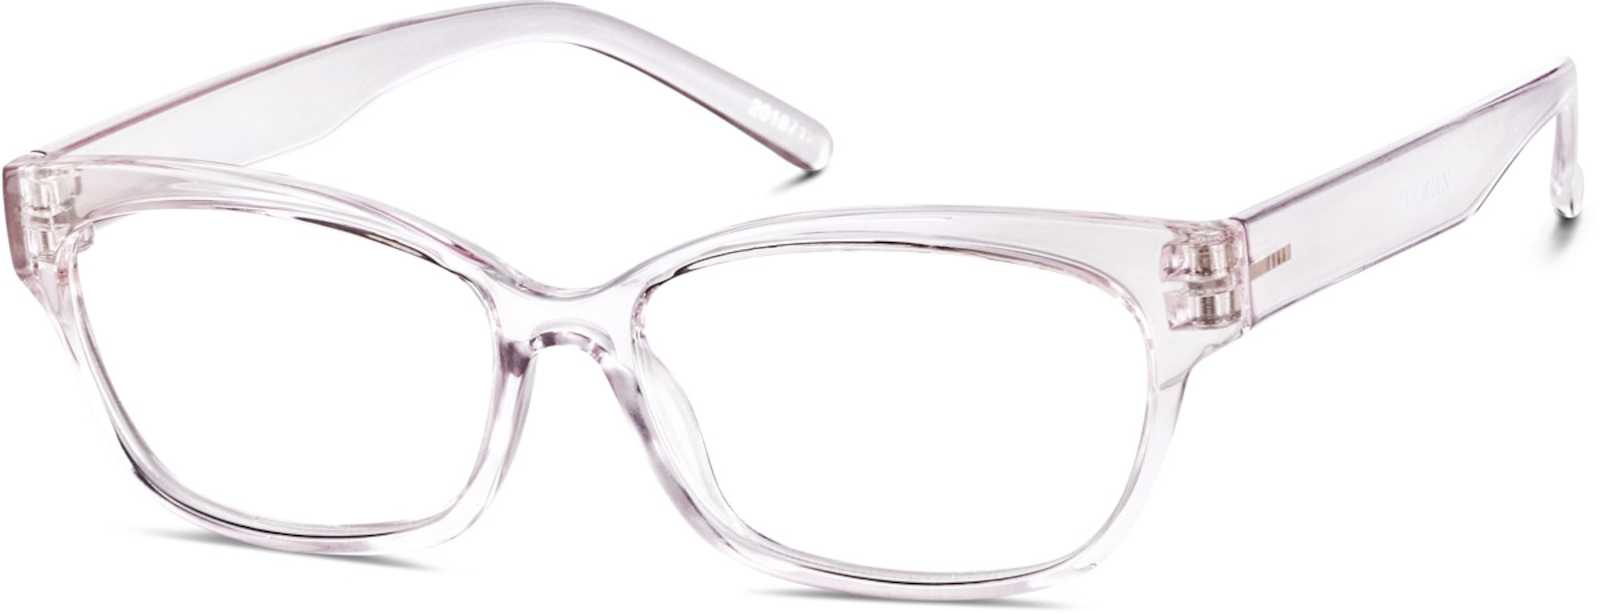 Zenni Women's Cat-Eye Prescription Glasses Translucent Pink Floral Plastic Full Rim Frame